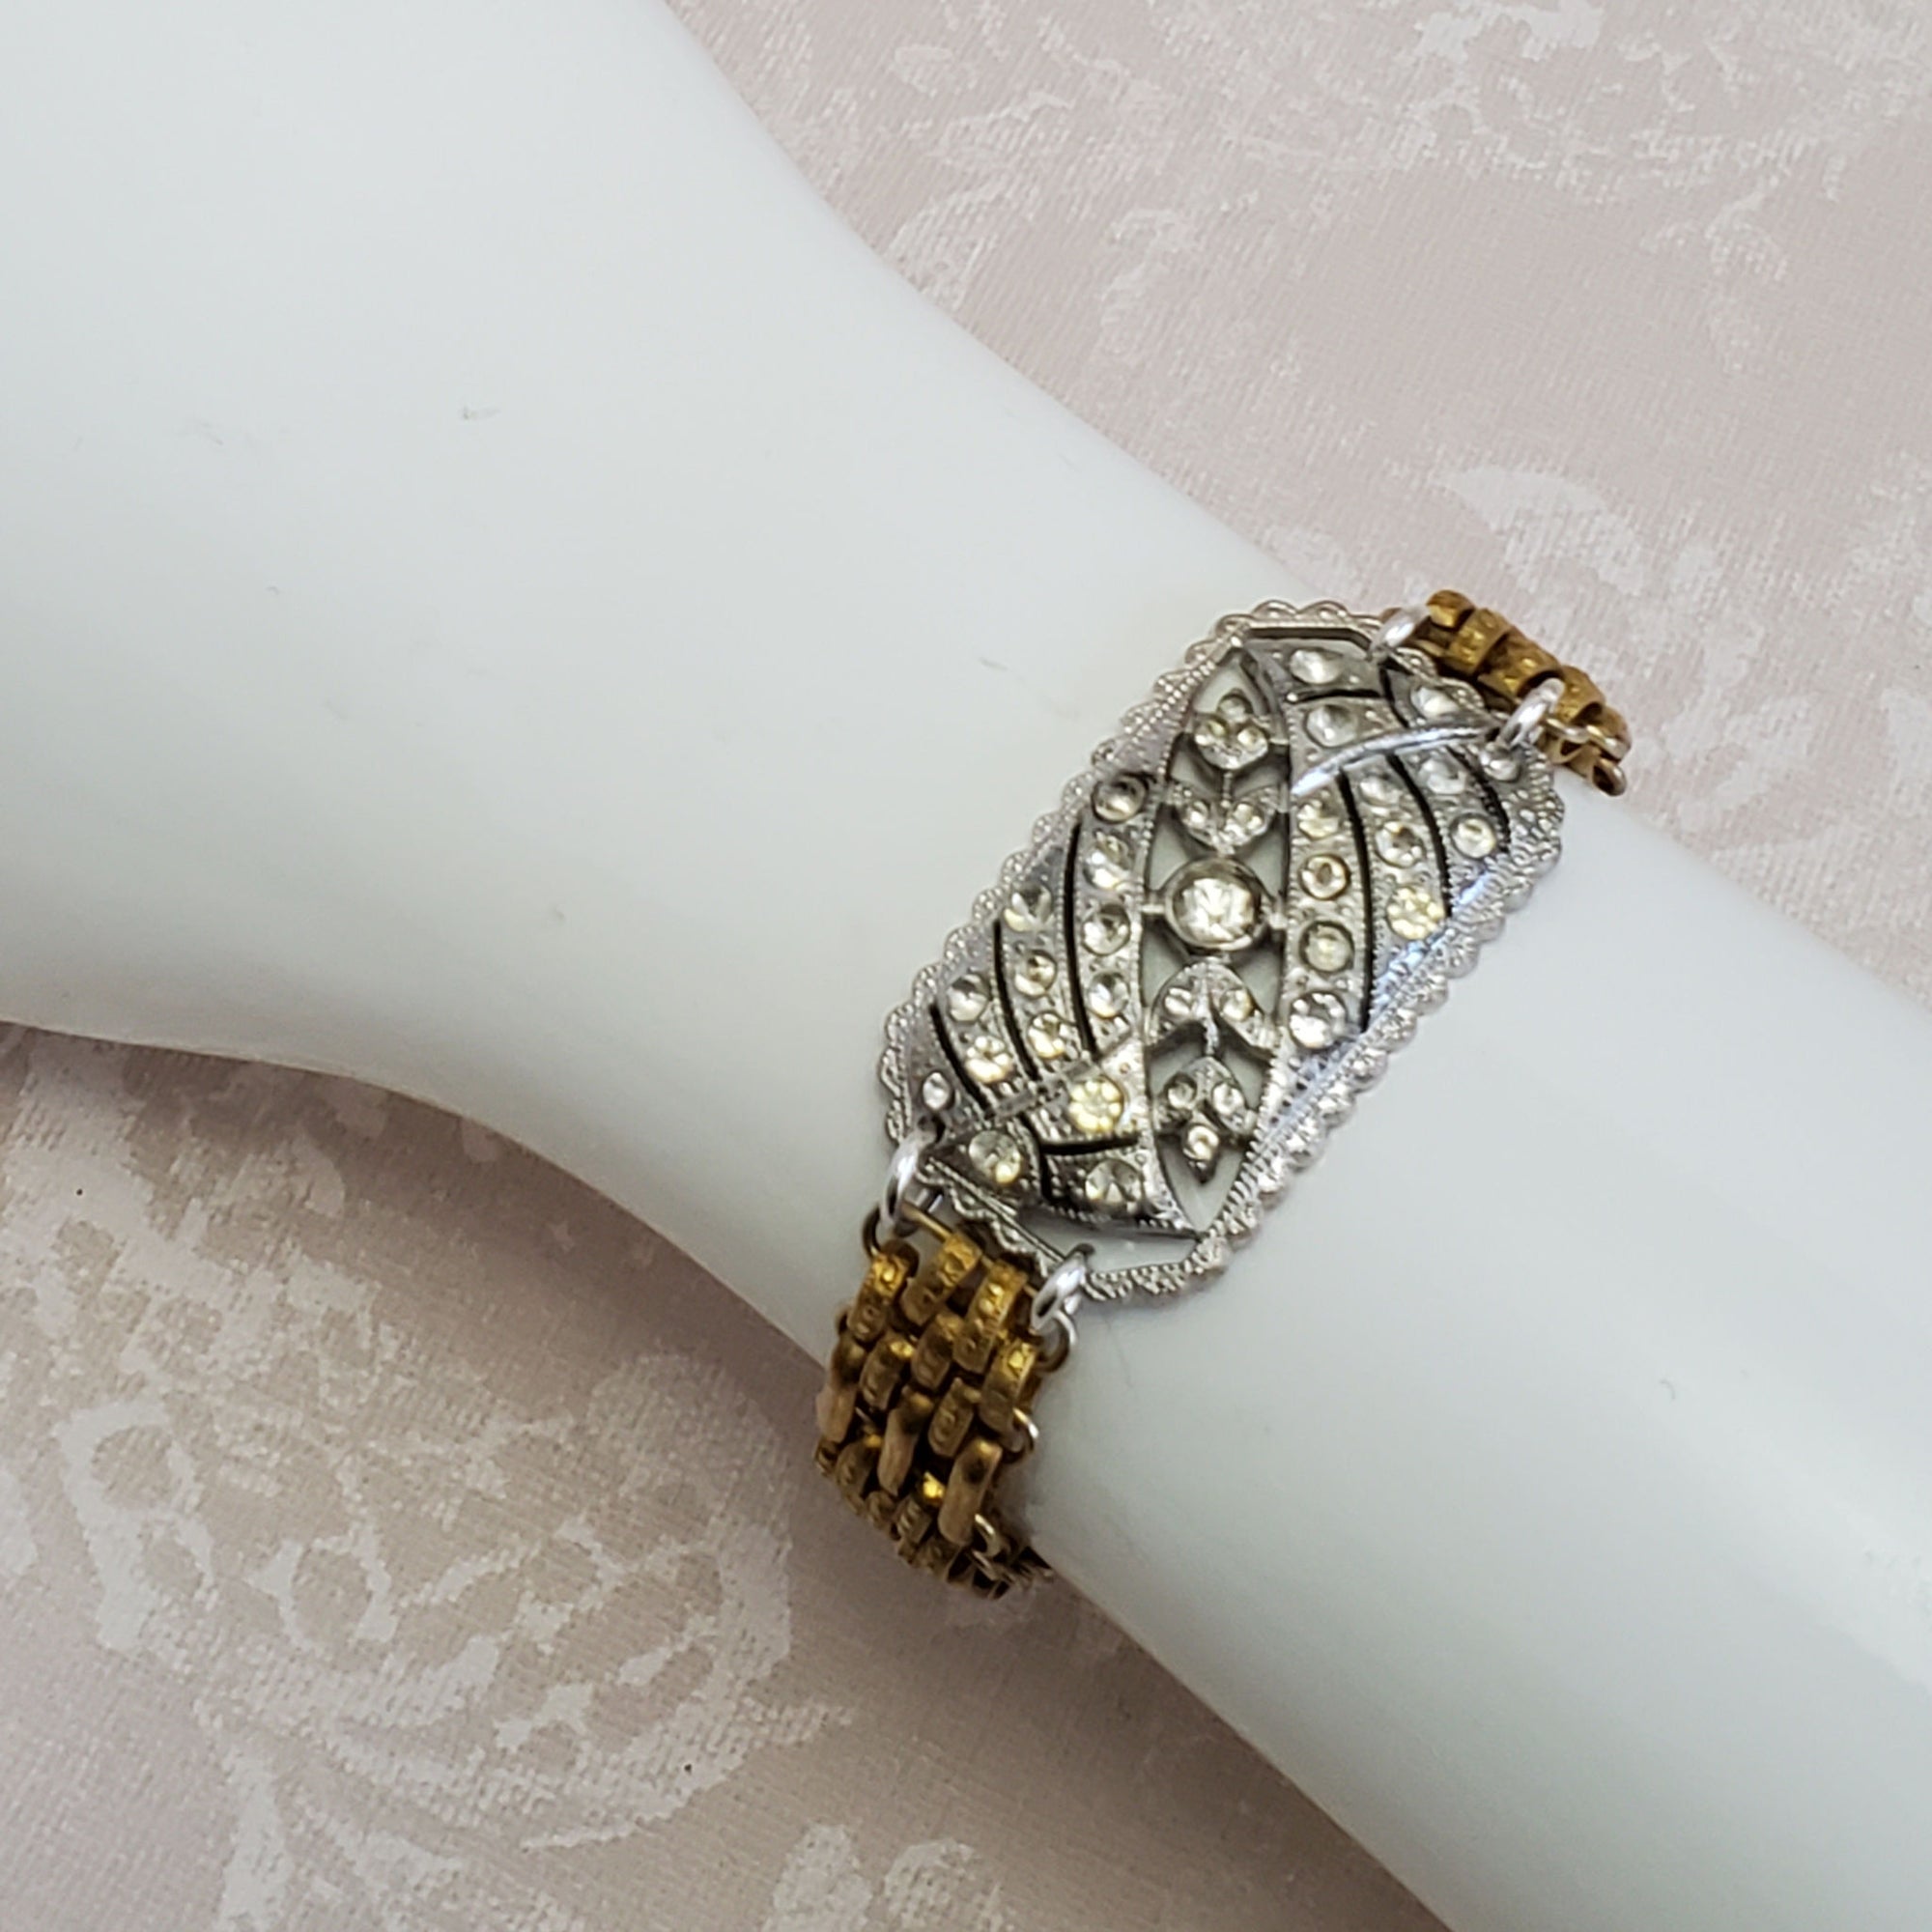 Antique Art Deco Bracelet with Gold Tone Watch Chain Bands